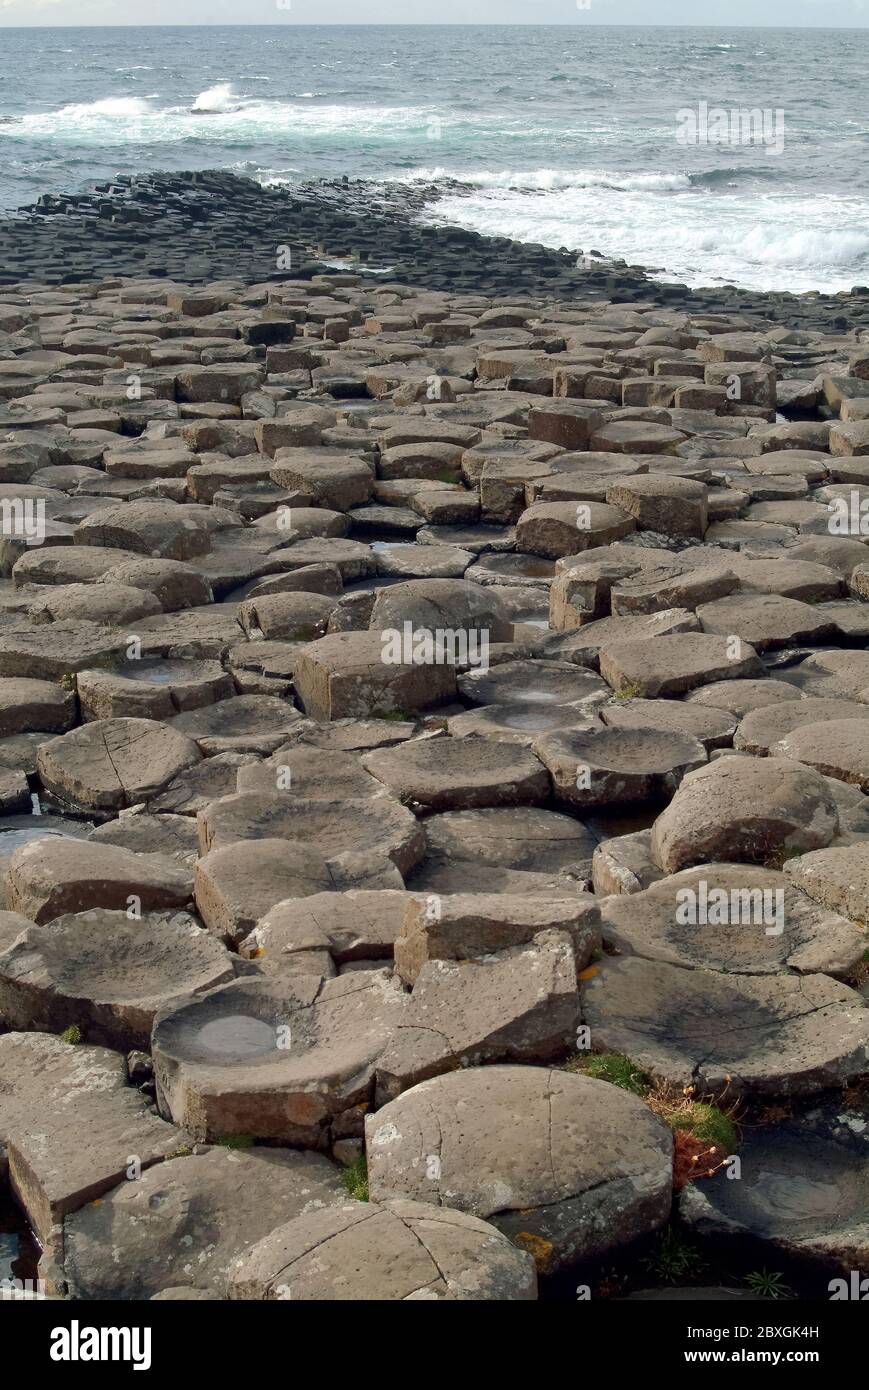 Giant's Causeway, Northern Ireland, Nordirland, Europe, Észak-Írország, UNESCO World Heritage Site Stock Photo